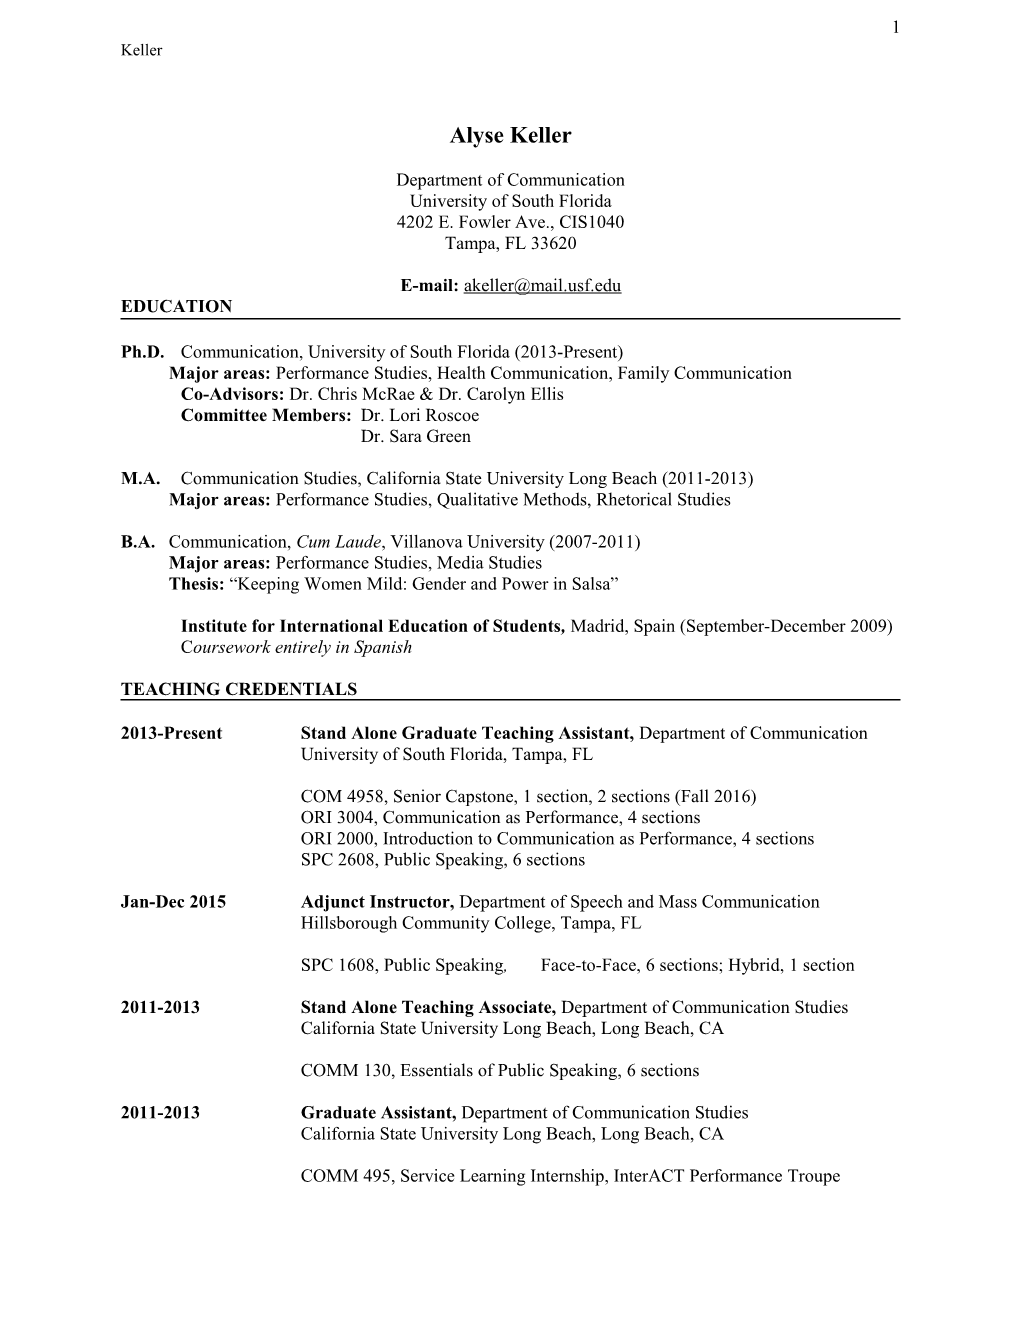 Ph.D. Communication, University of South Florida (2013-Present)